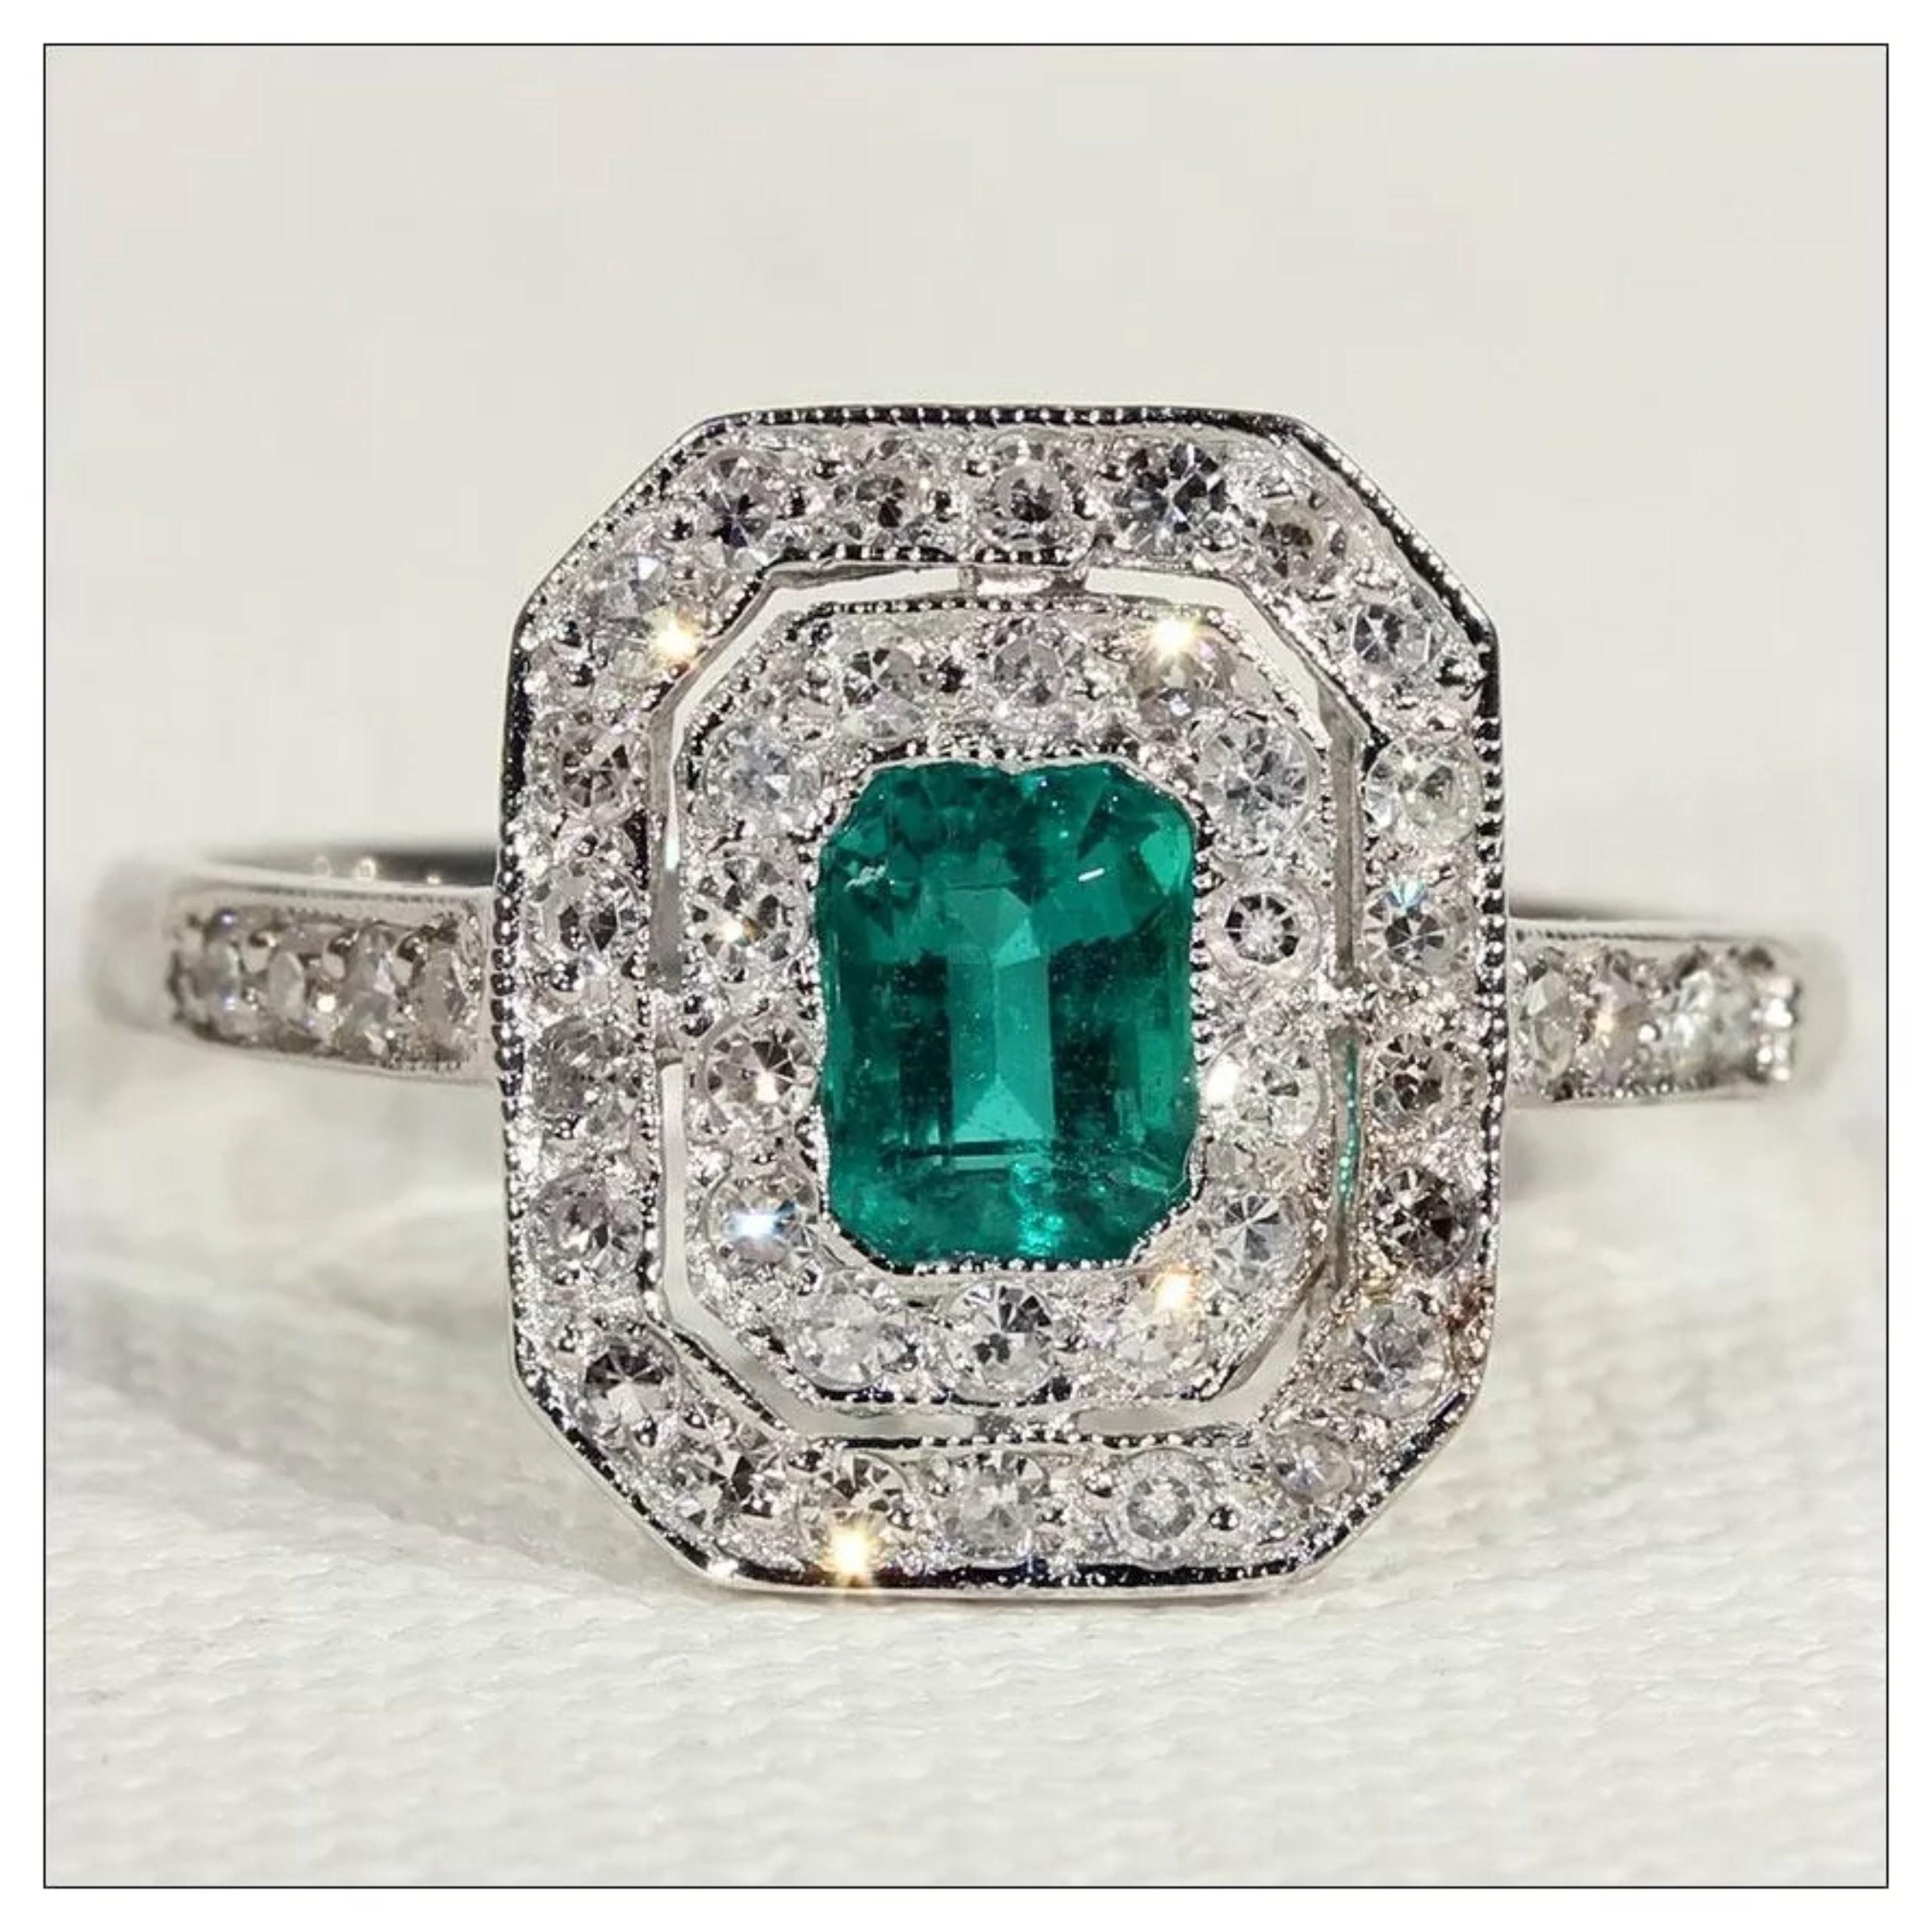 For Sale:  2 Carat Emerald Cut Emerald Diamond Engagement Ring, Halo Emerald Diamond Ring 2